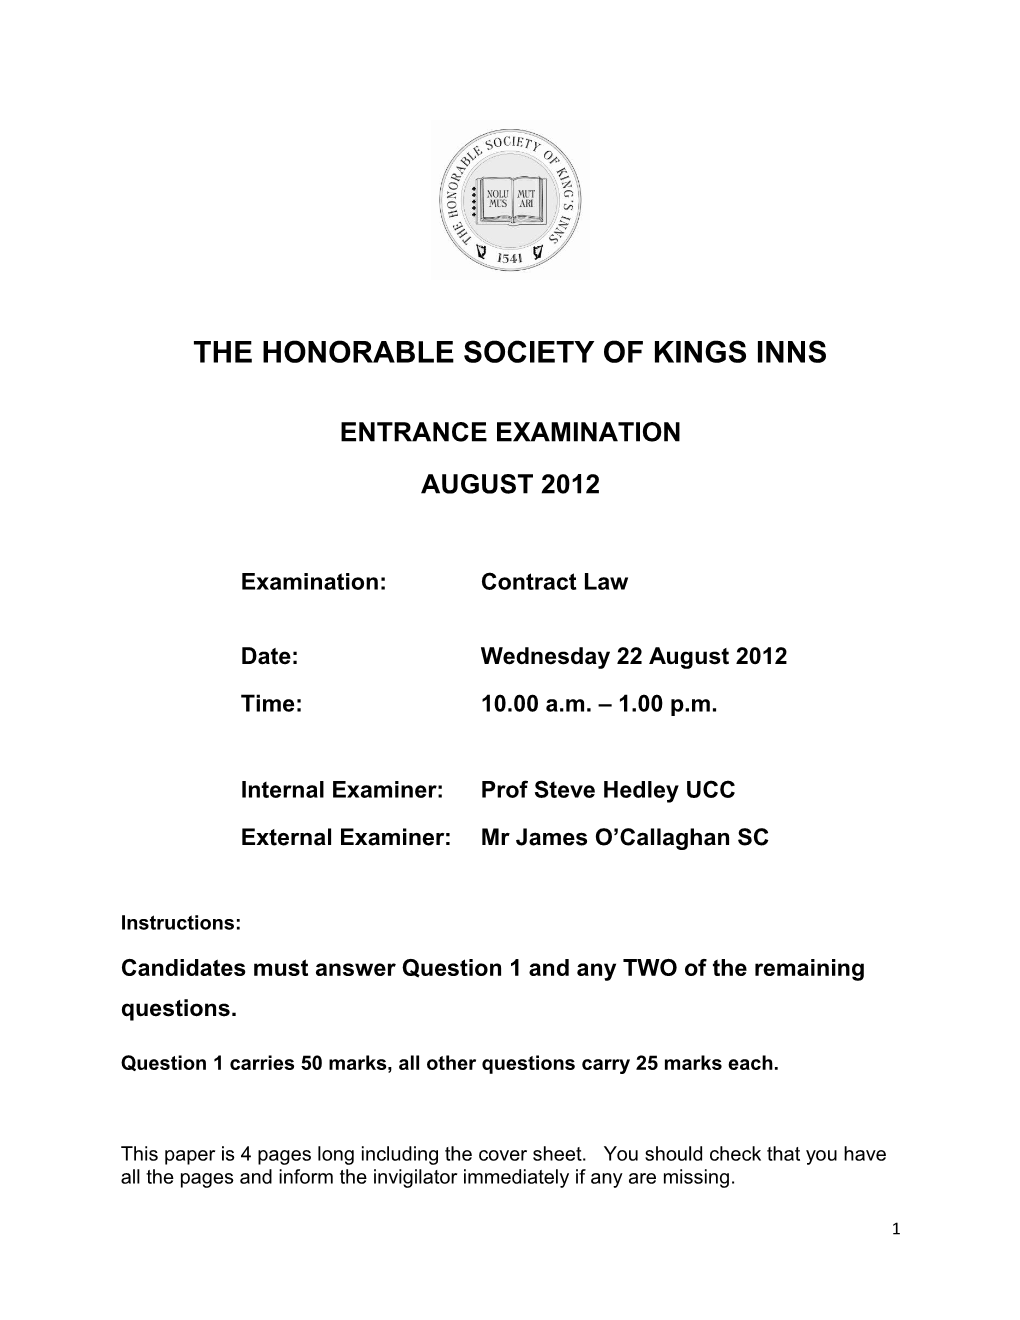 The Honorable Society of Kings Inns